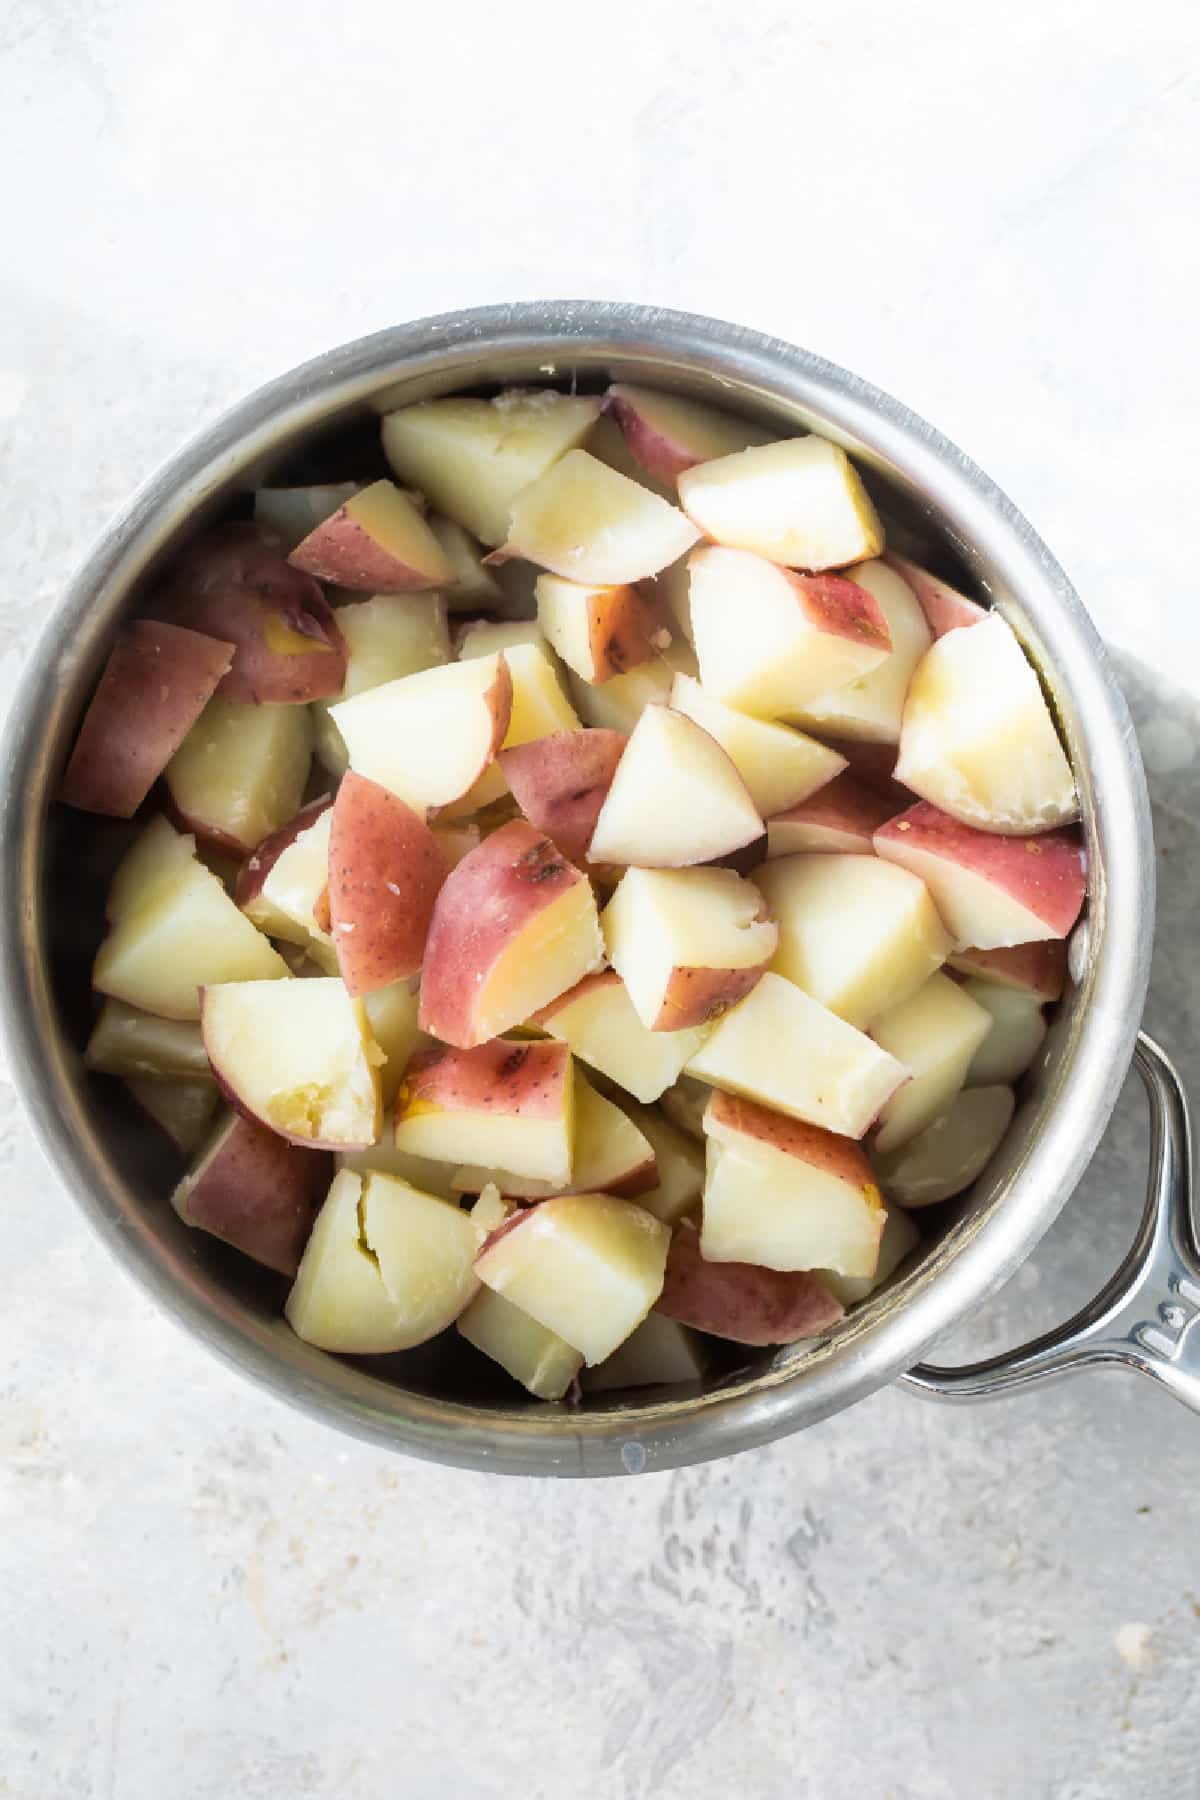 A saucepan full of peeled, diced red-skinned potatoes.